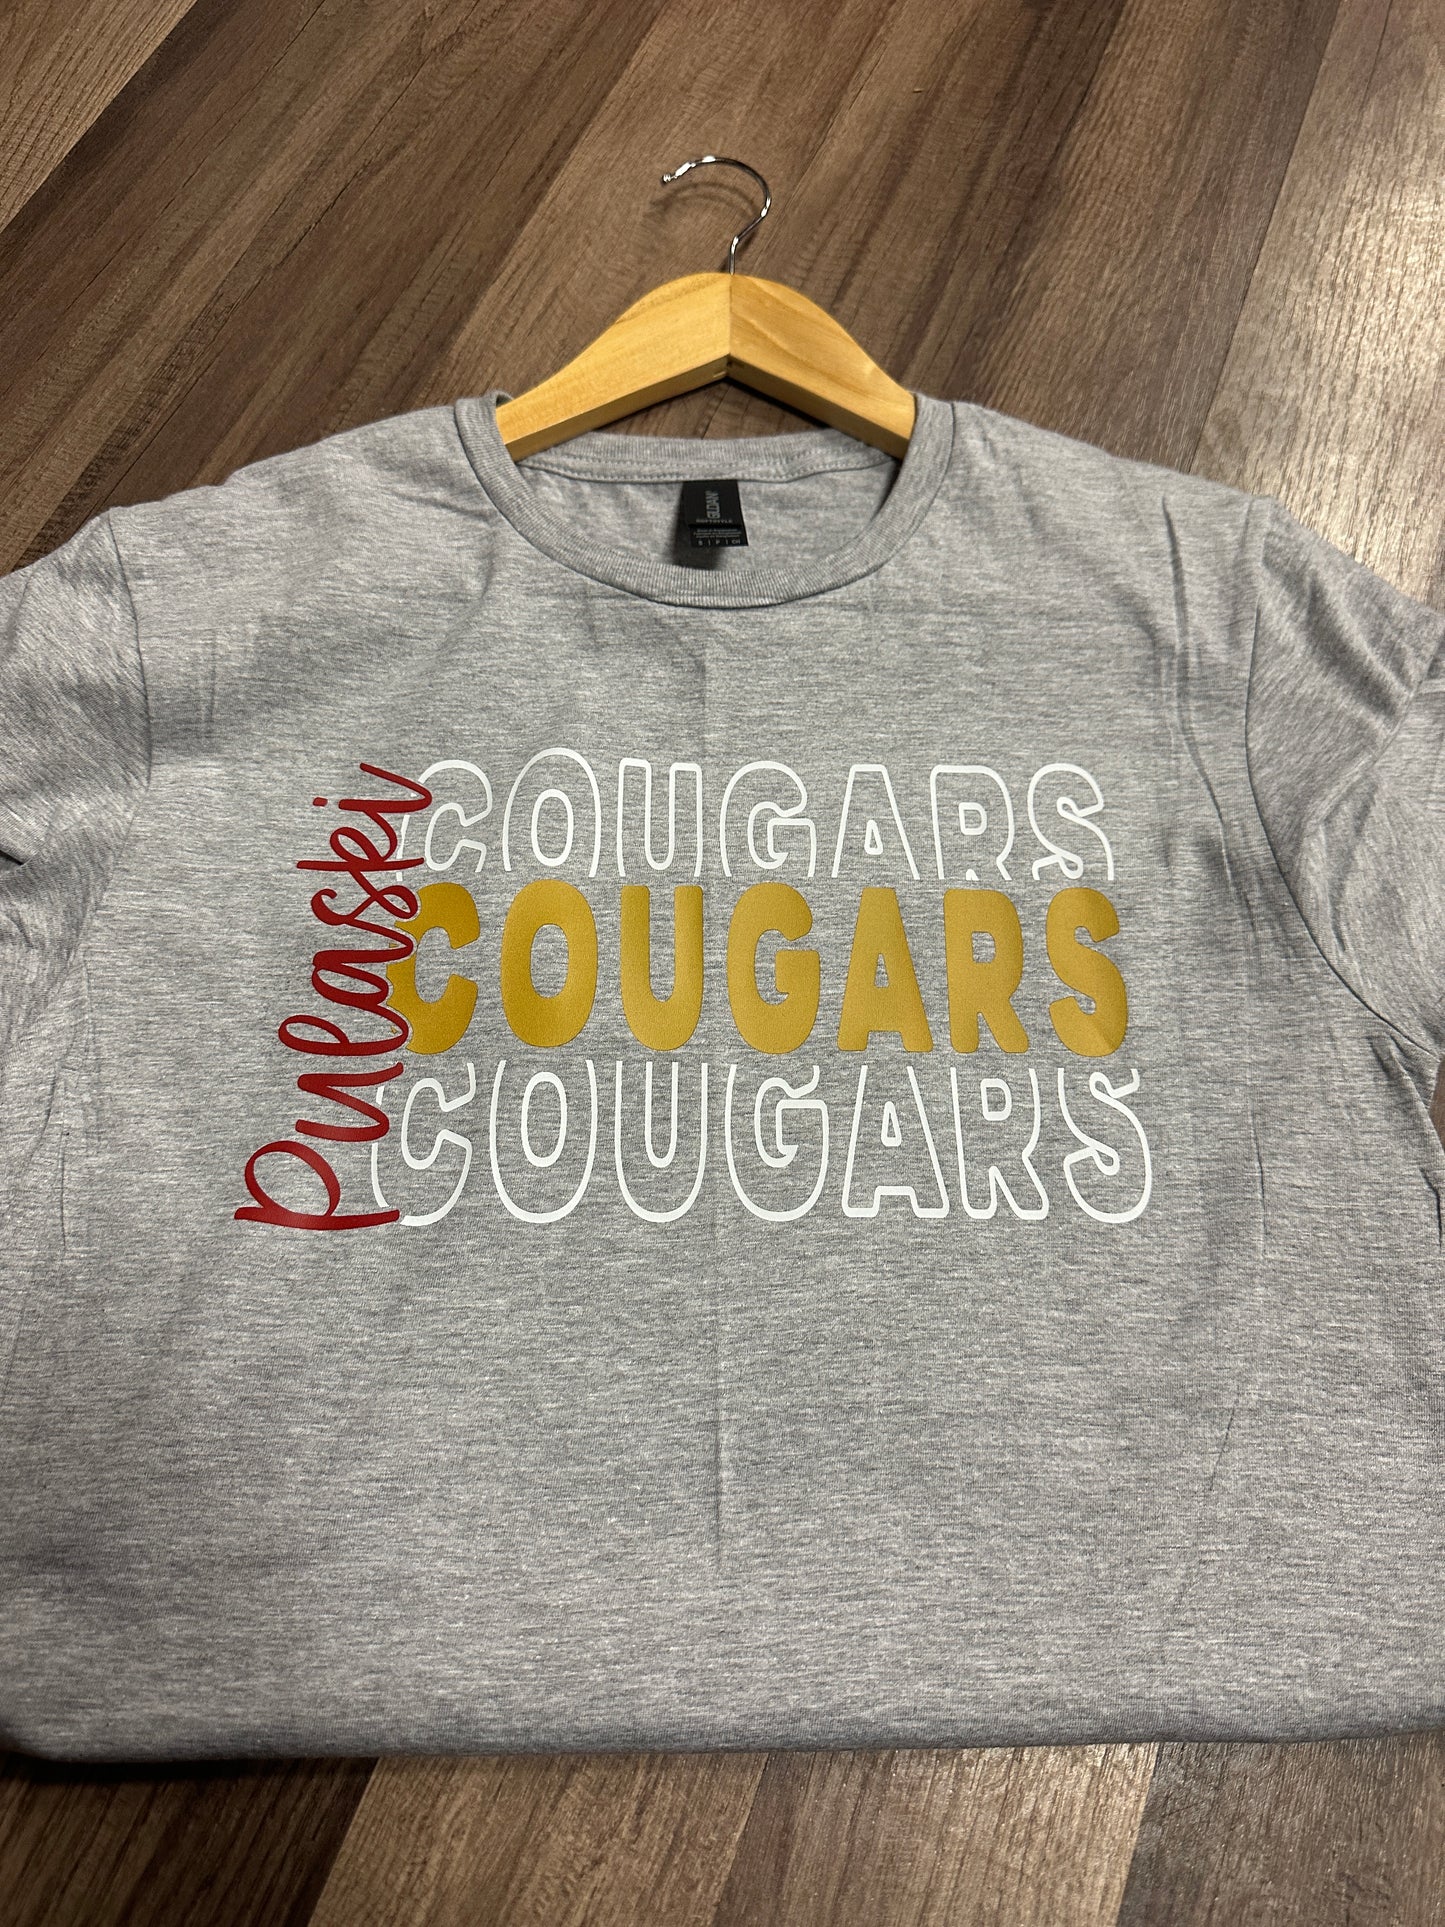 Pulaski Cougar ss shirt